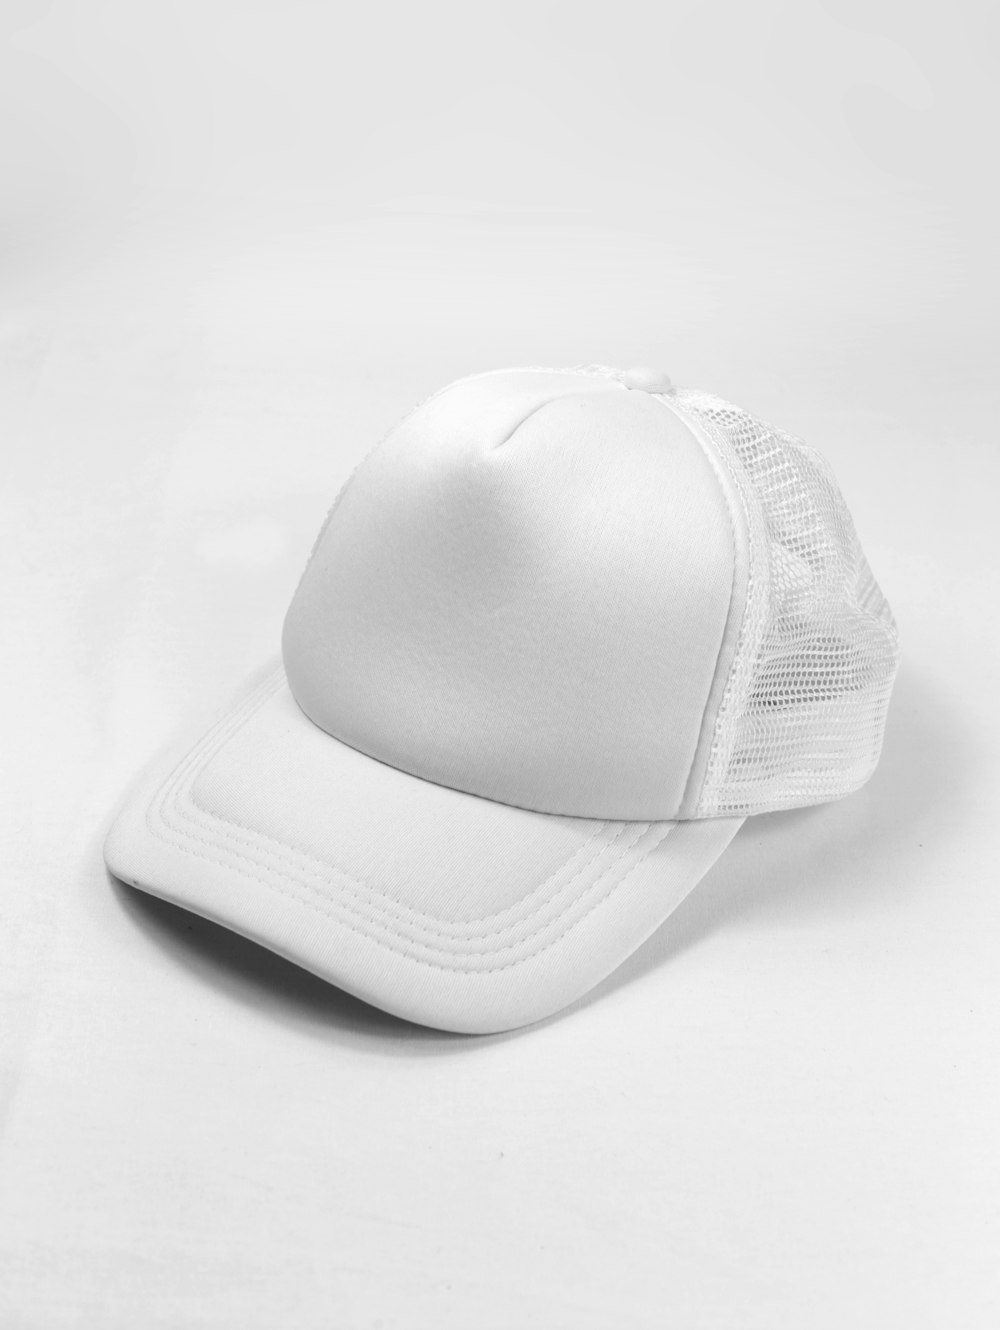 white baseball cap on white surface